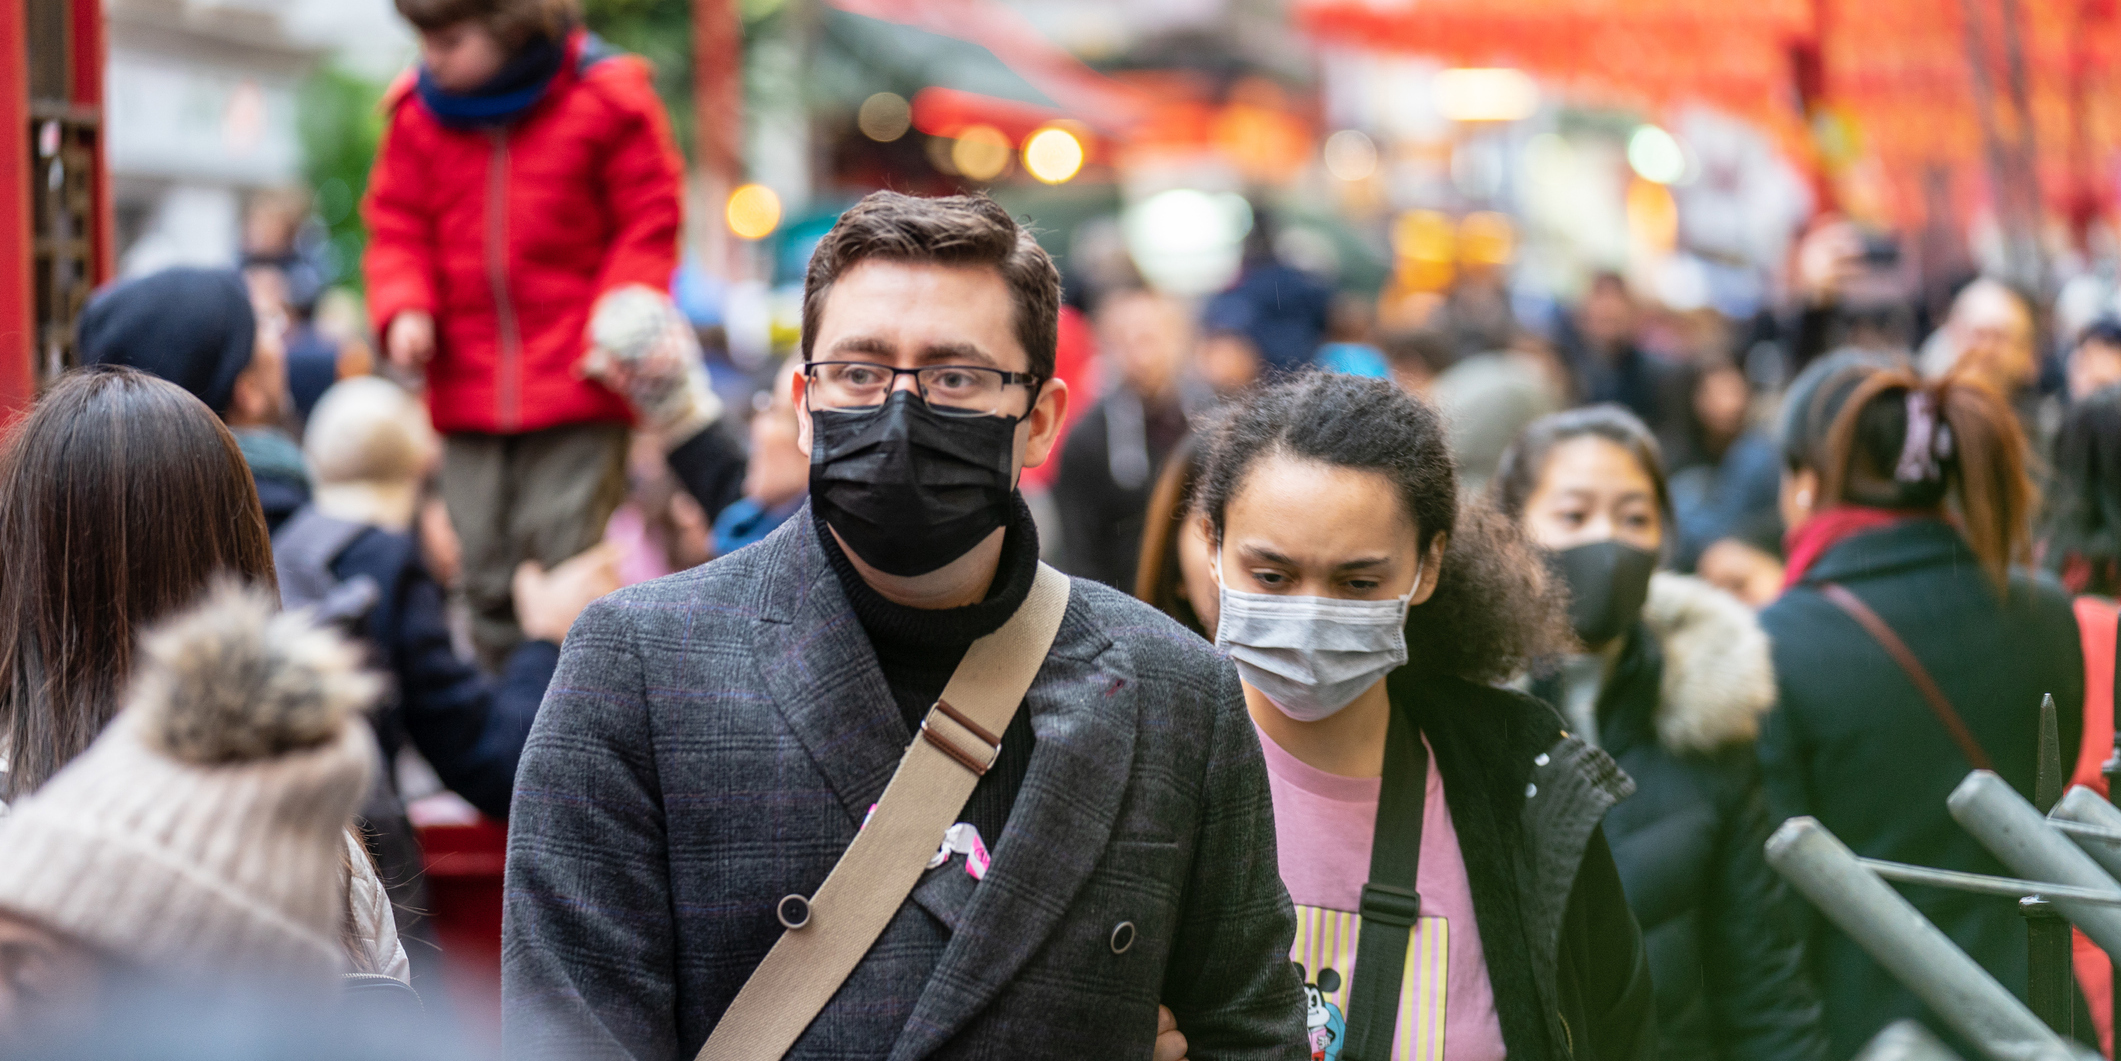 Two people with respirators avoiding Coronavirus exposure